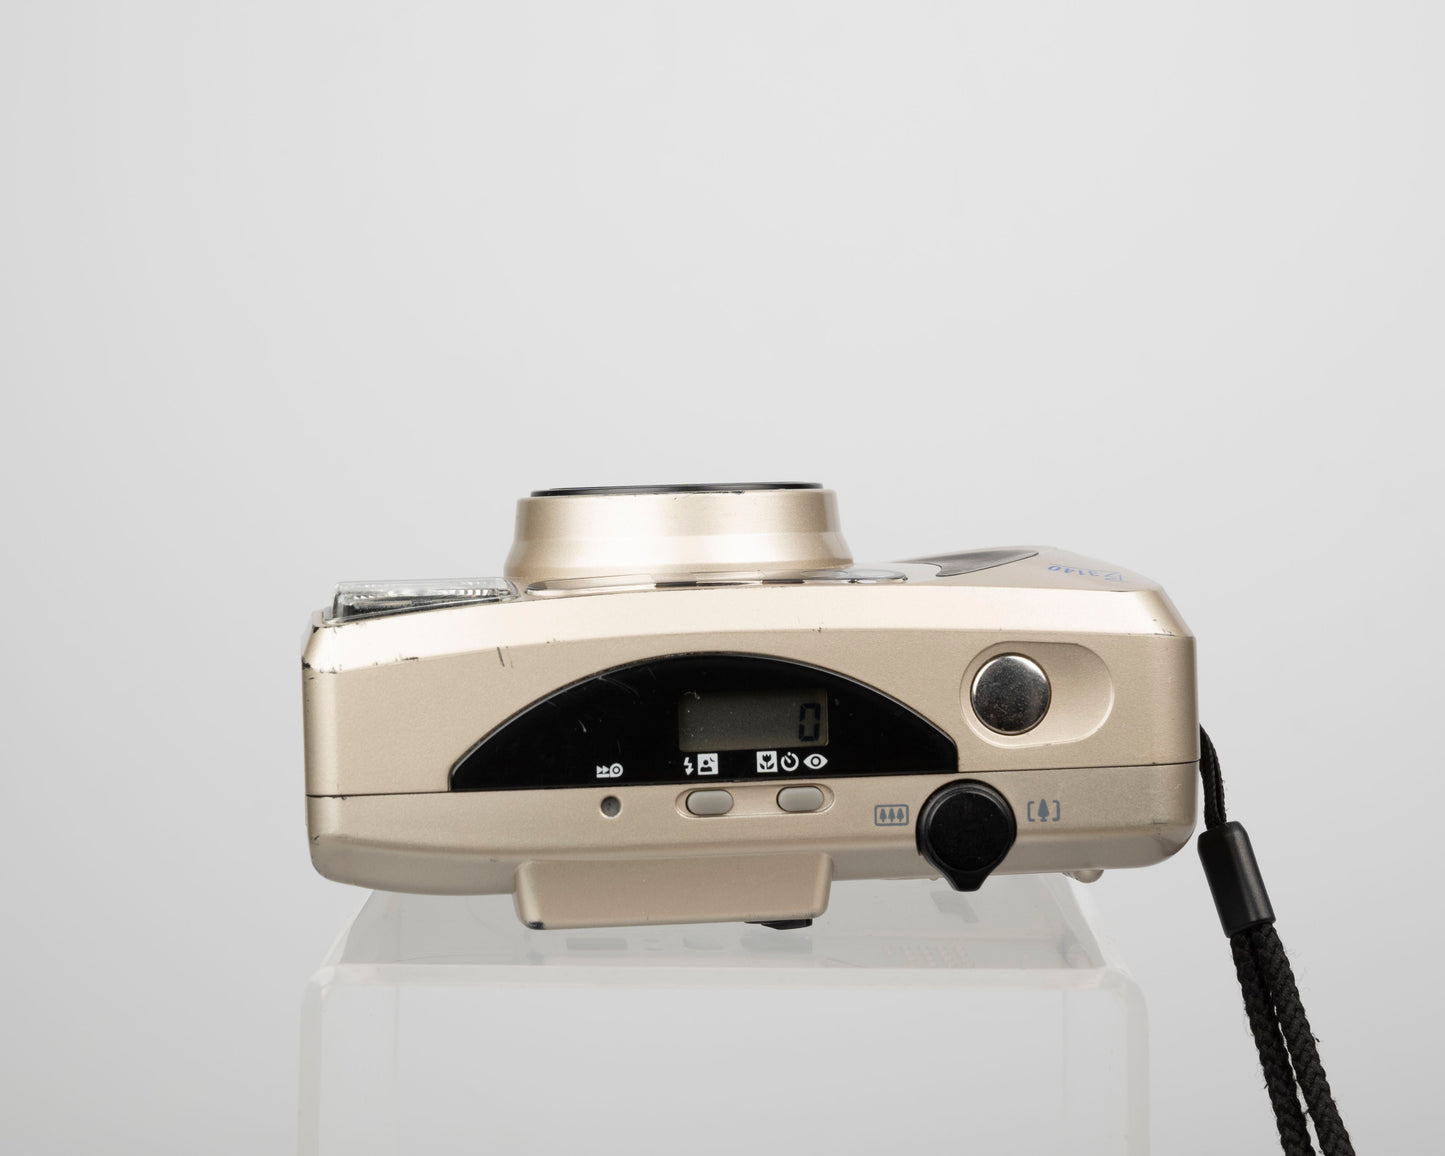 Vivitar PZ3140 35mm camera w/ original box and manual